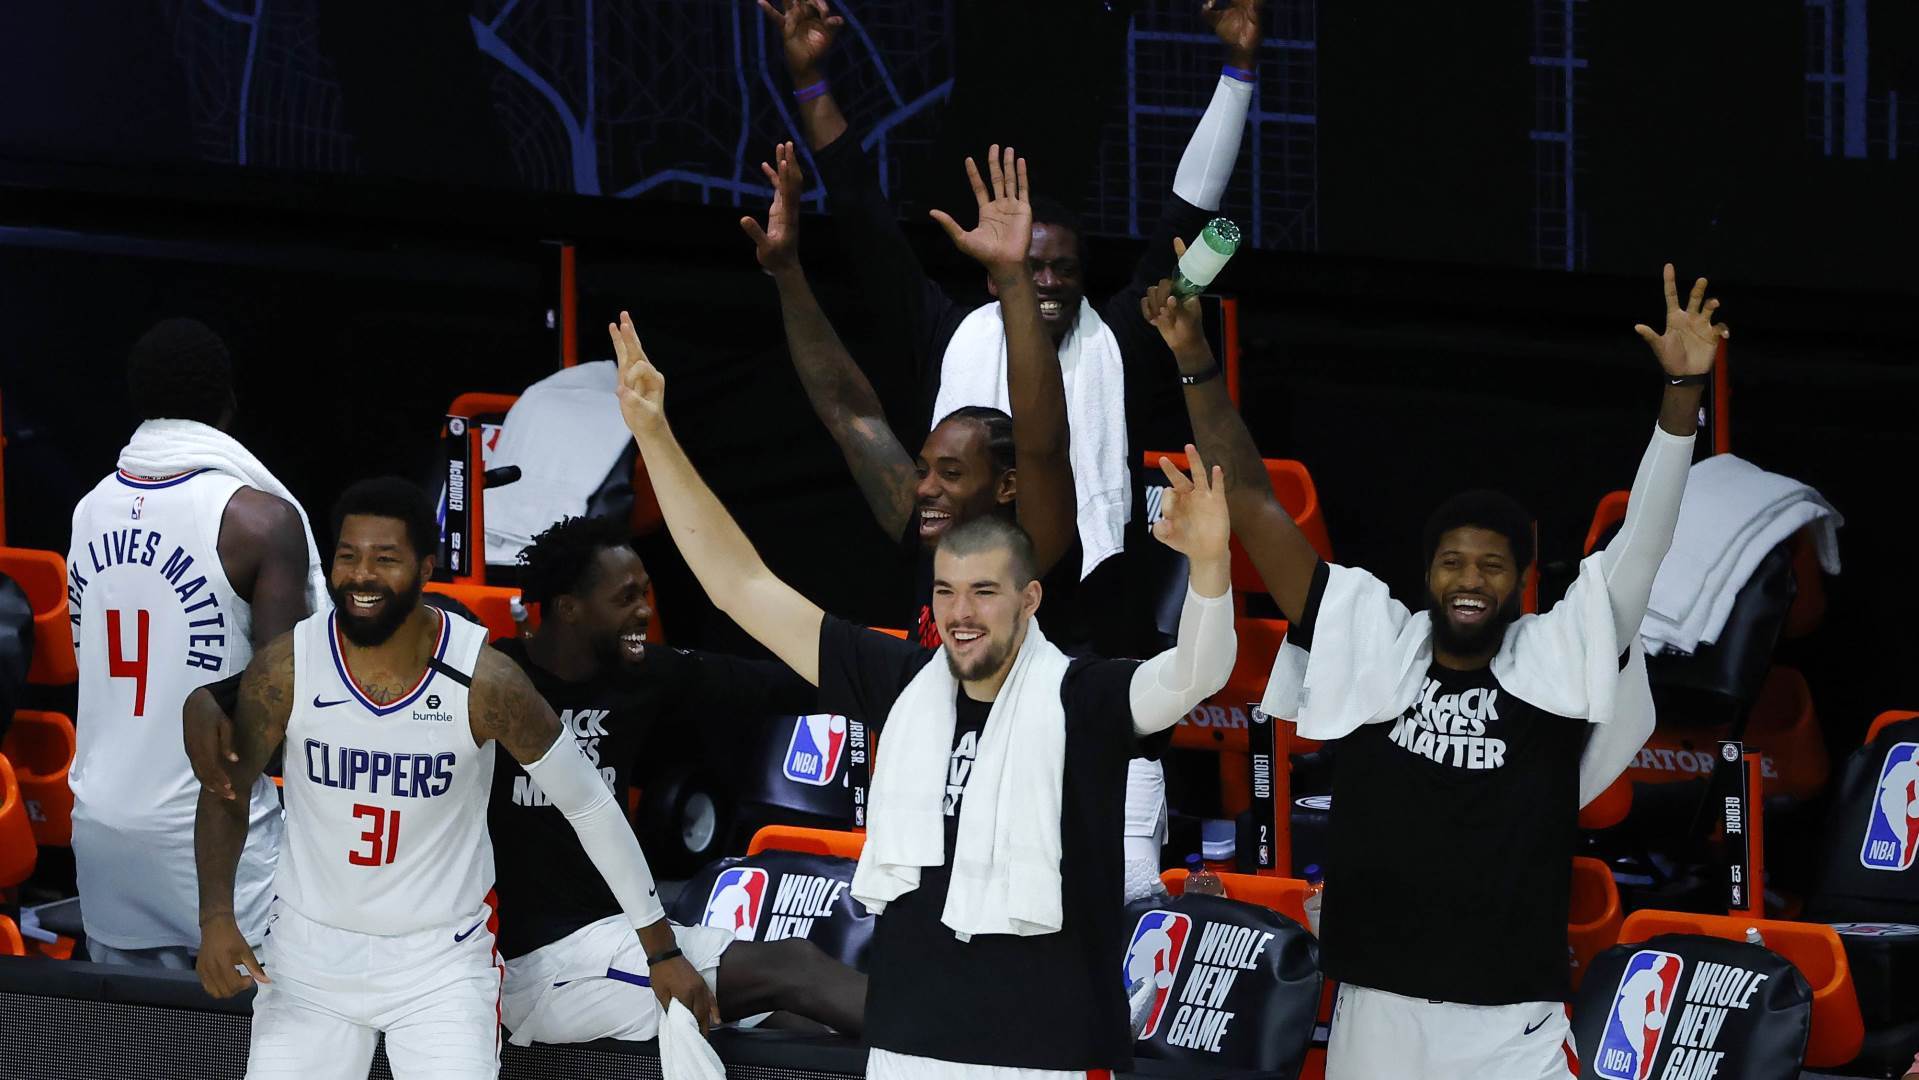  NBA-rekord-u-trojkama-Klipersi-ubacili-25-suteva-za-tri-poena-VIDEO 